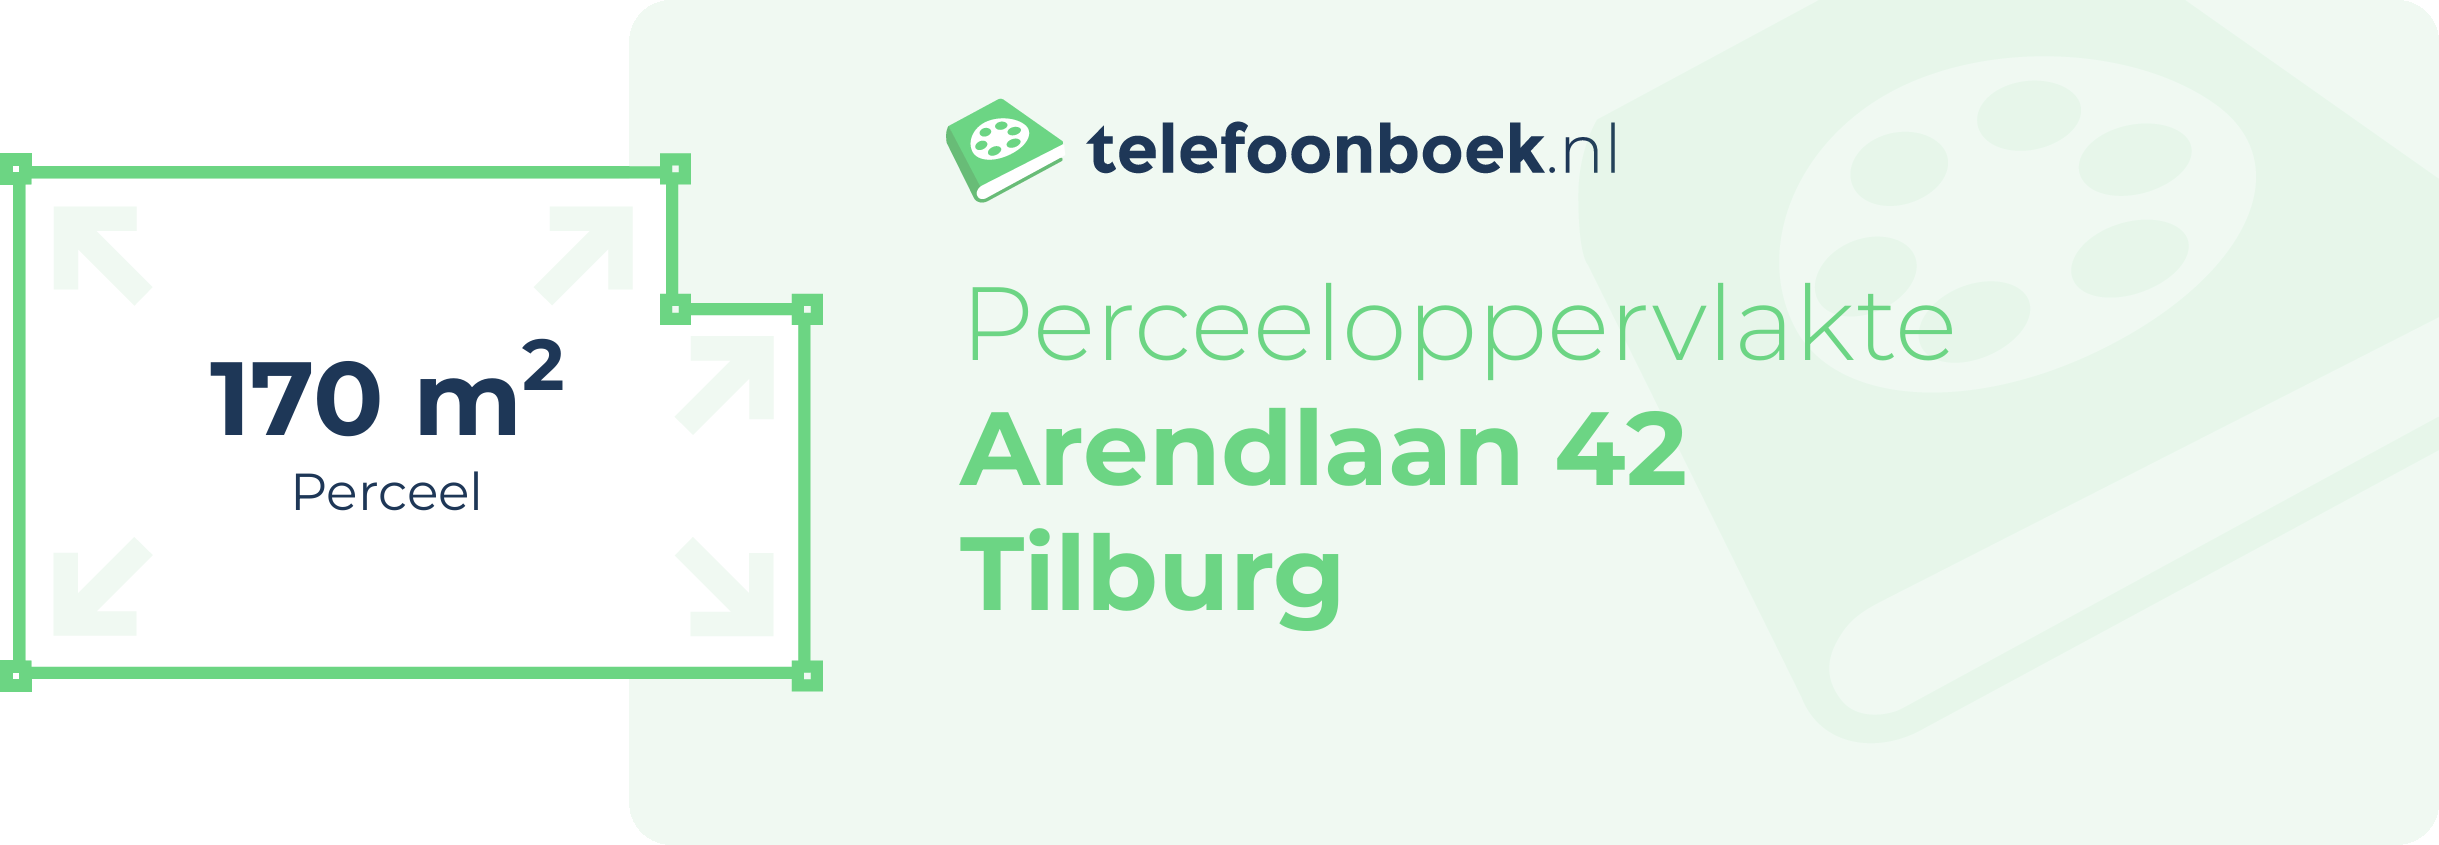 Perceeloppervlakte Arendlaan 42 Tilburg